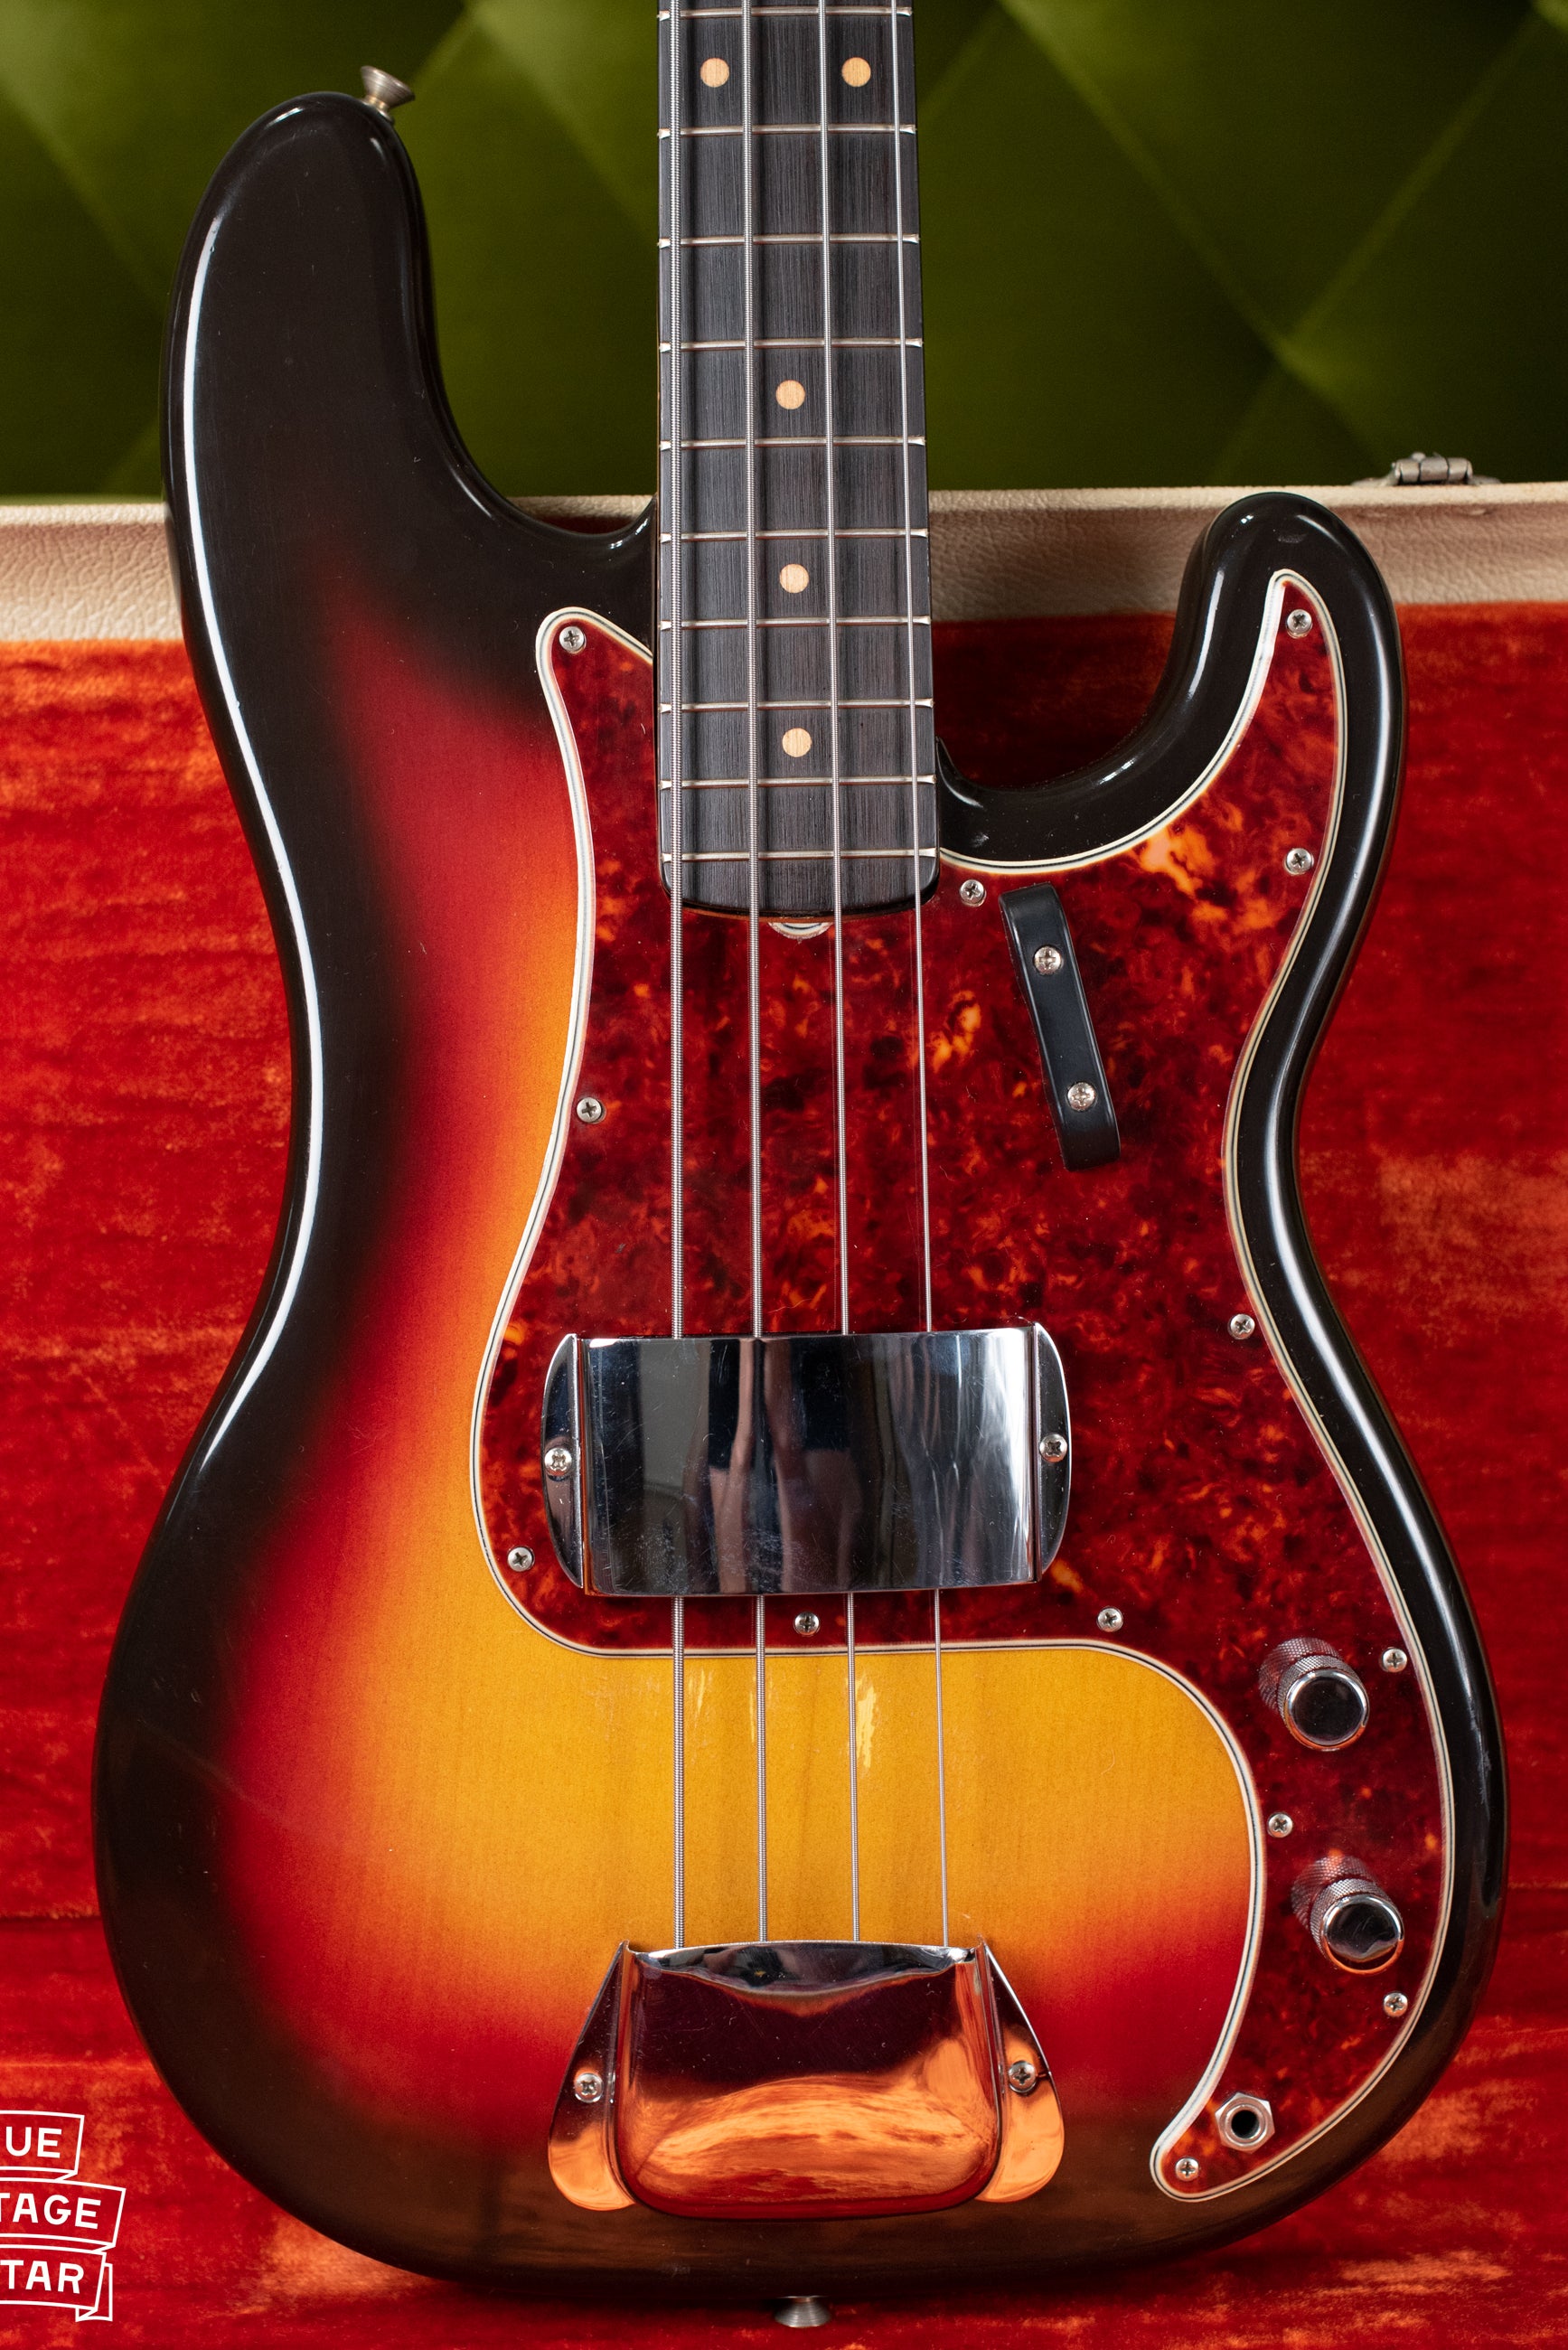 1963 Fender Precision Bass guitar vintage